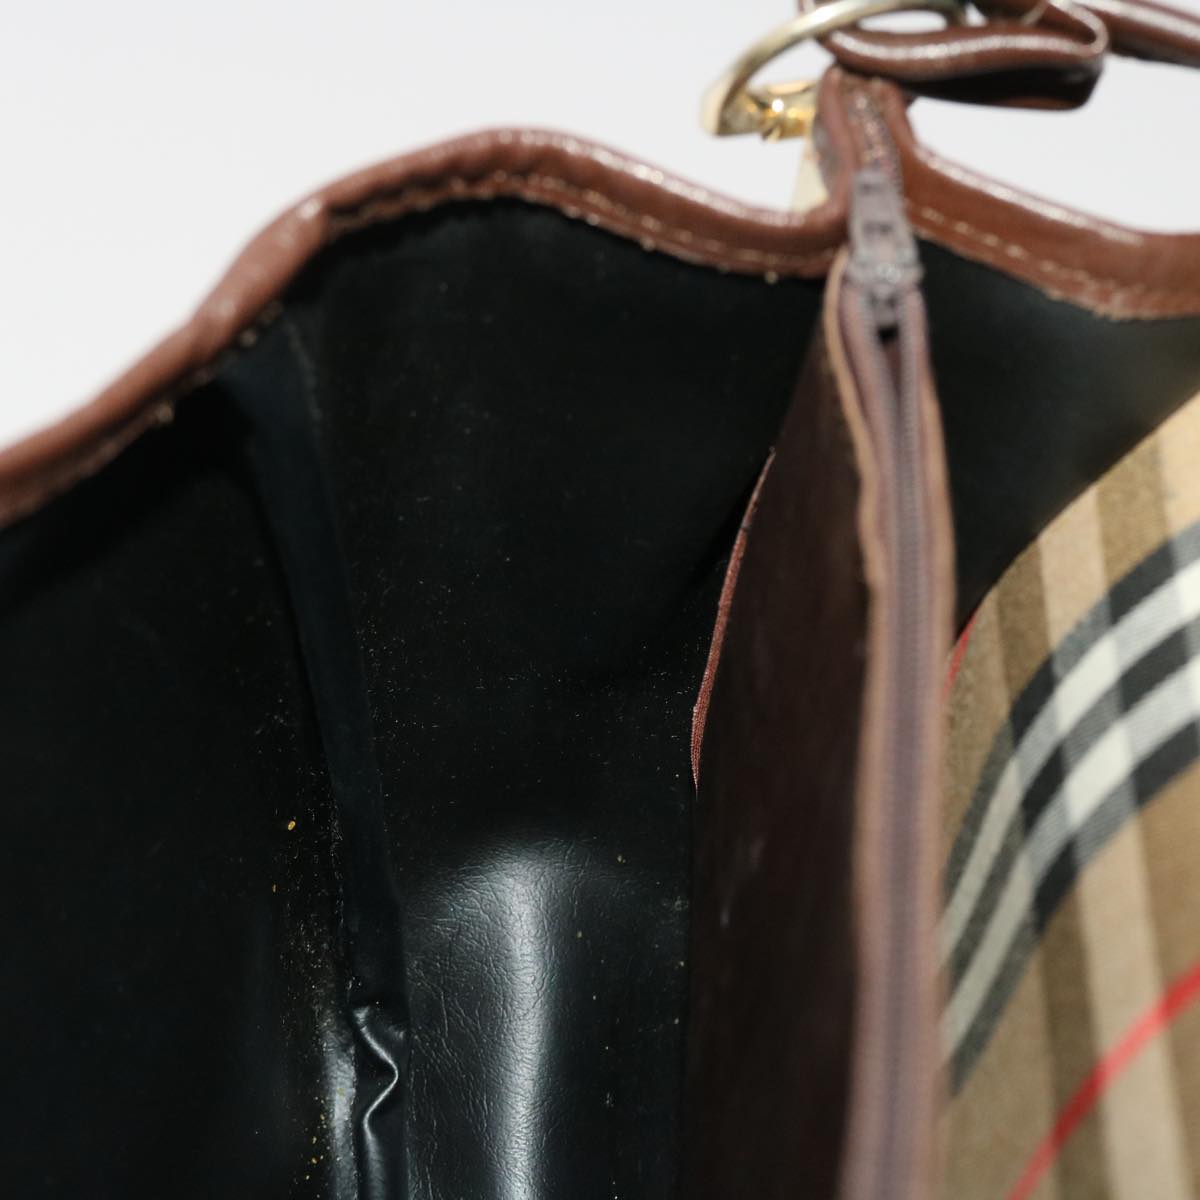 Burberrys Nova Check Shoulder Bag Canvas Brown Black Red Auth yk7657B